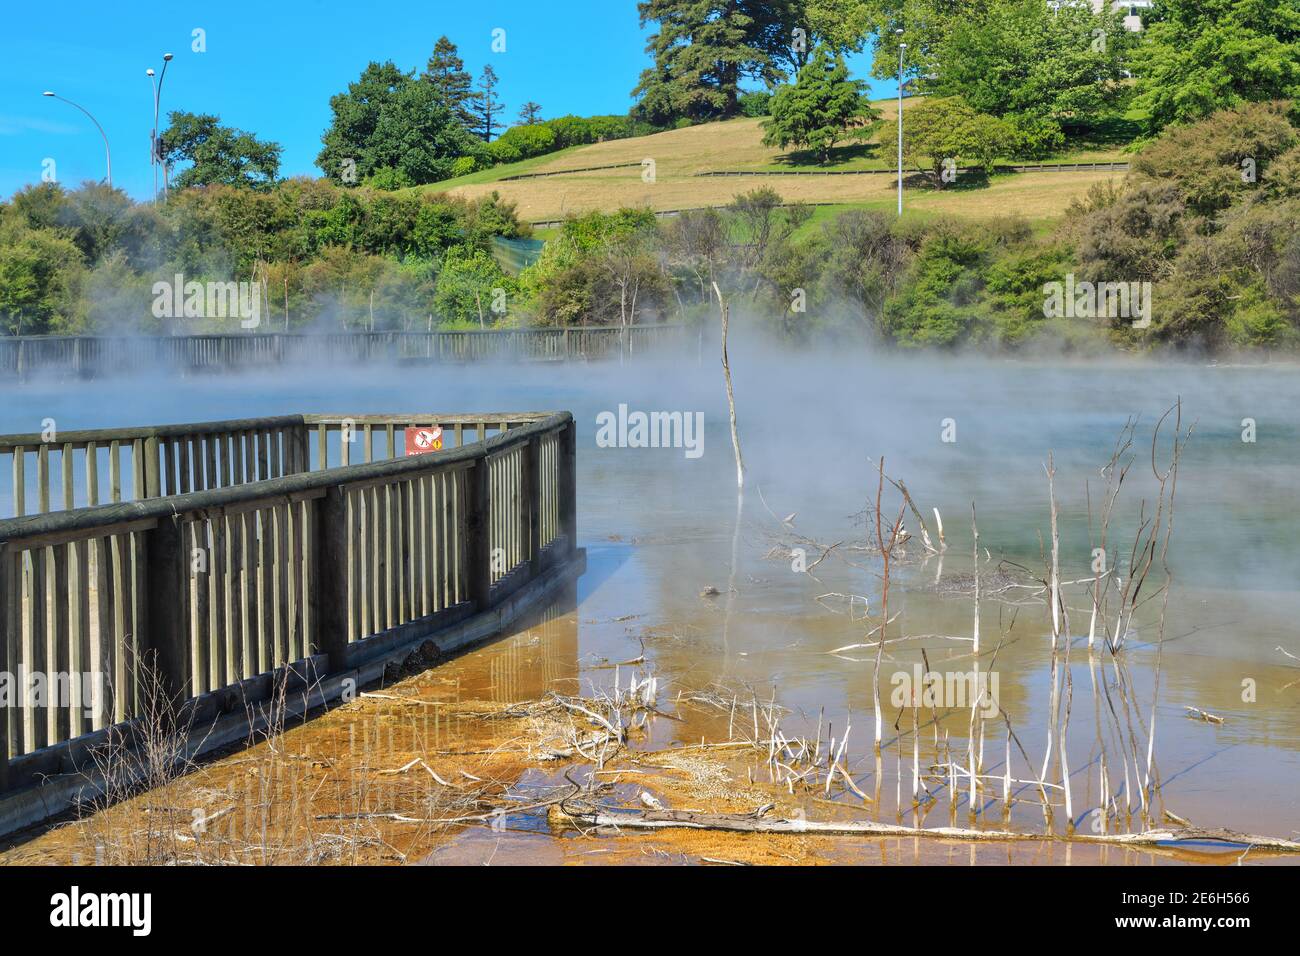 A wooden viewing platform by a steaming hot geothermal lake in Kuirau Park, Rotorua, New Zealand Stock Photo